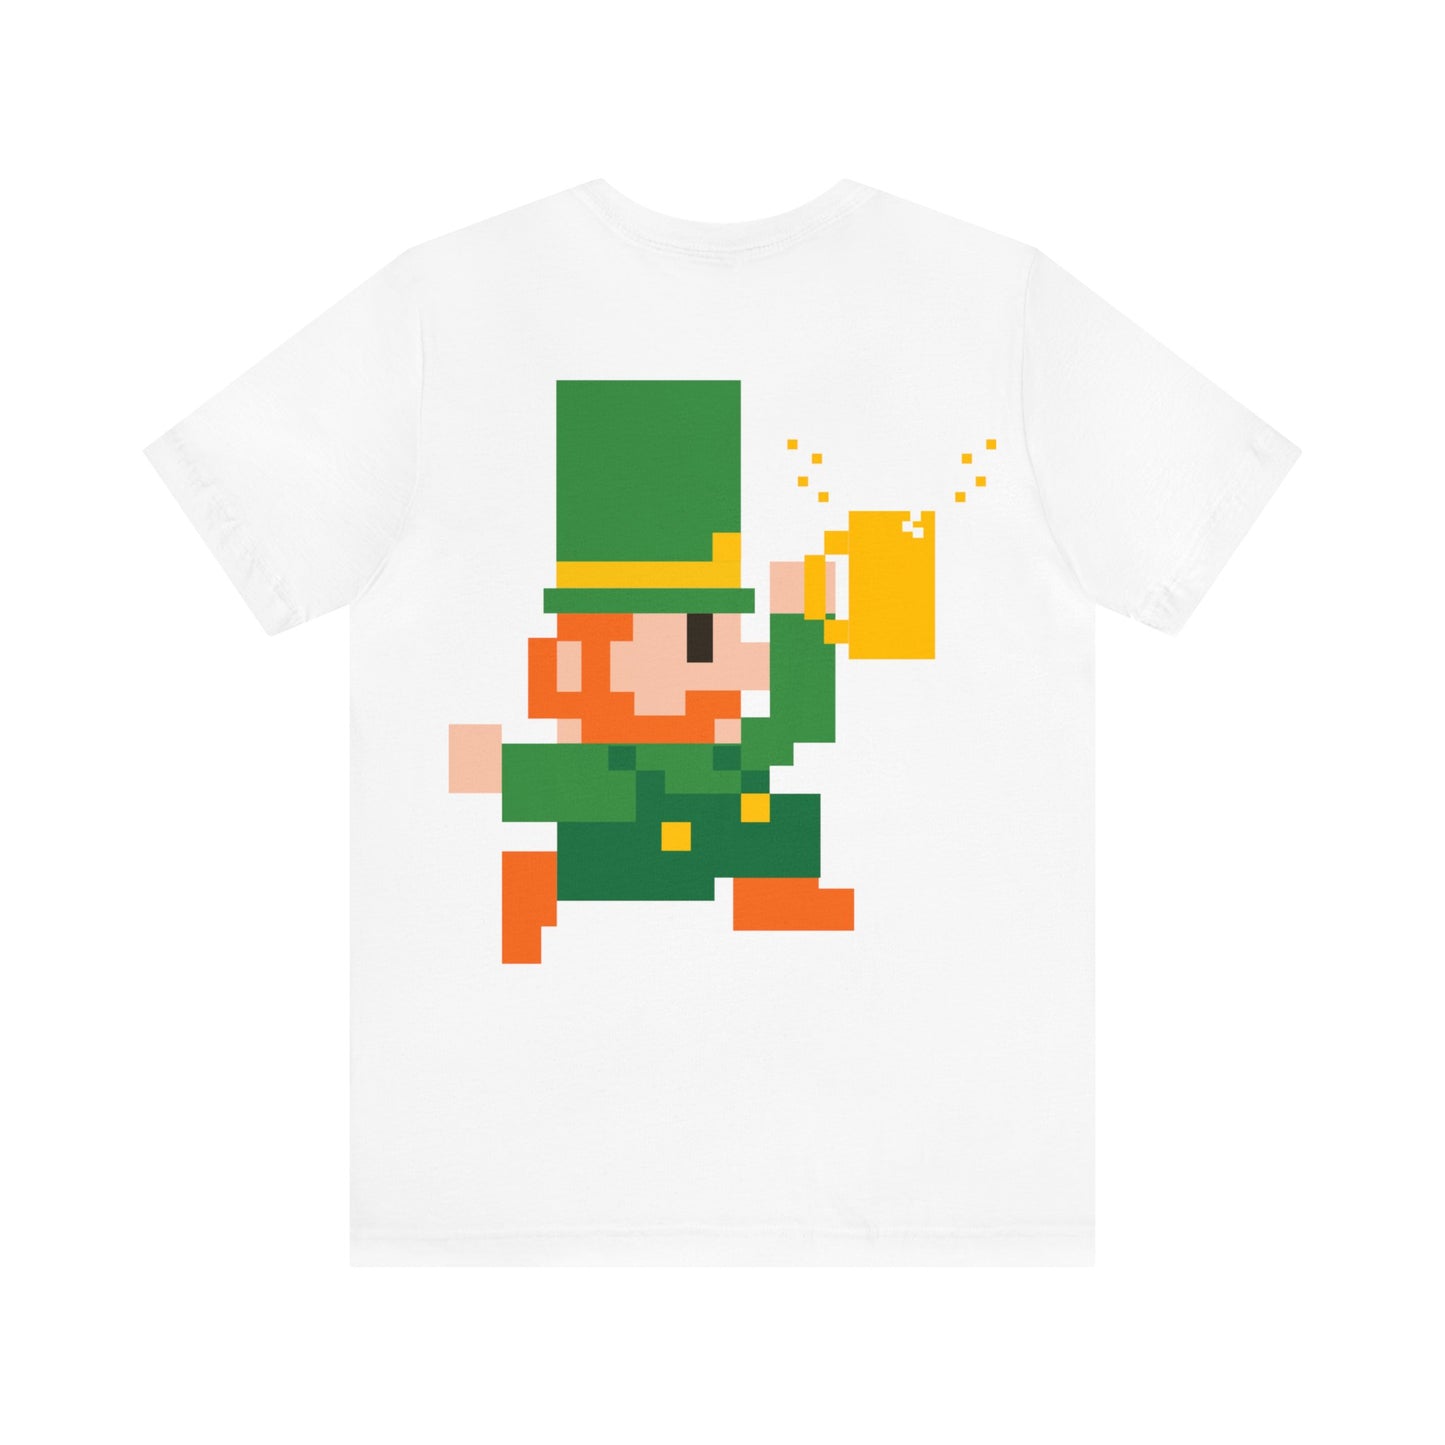 St. Patricks Day Funny T- Shirt :" FRONT- I'm not short, I'm Leprechaun size - Back- Leprechaun W/ Beer"